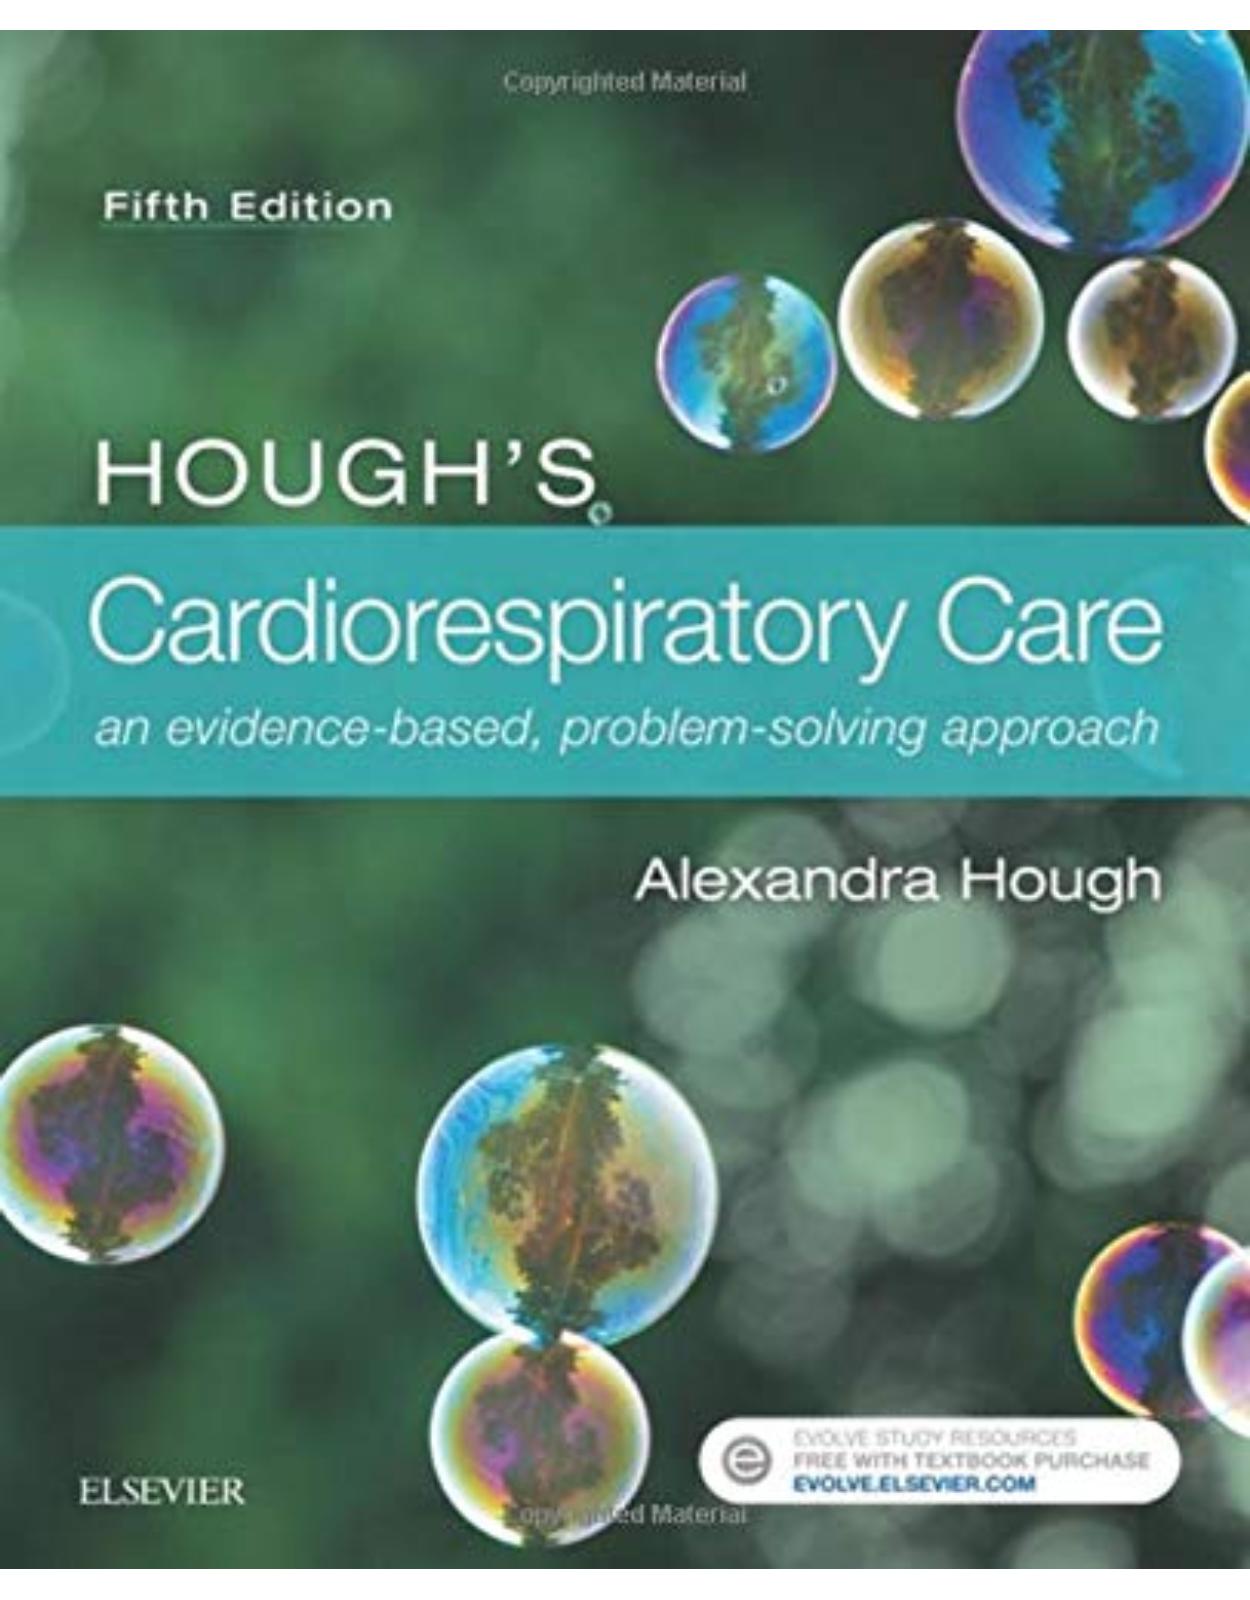 Hough's Cardiorespiratory Care: an evidence-based, problem-solving approach, 5e